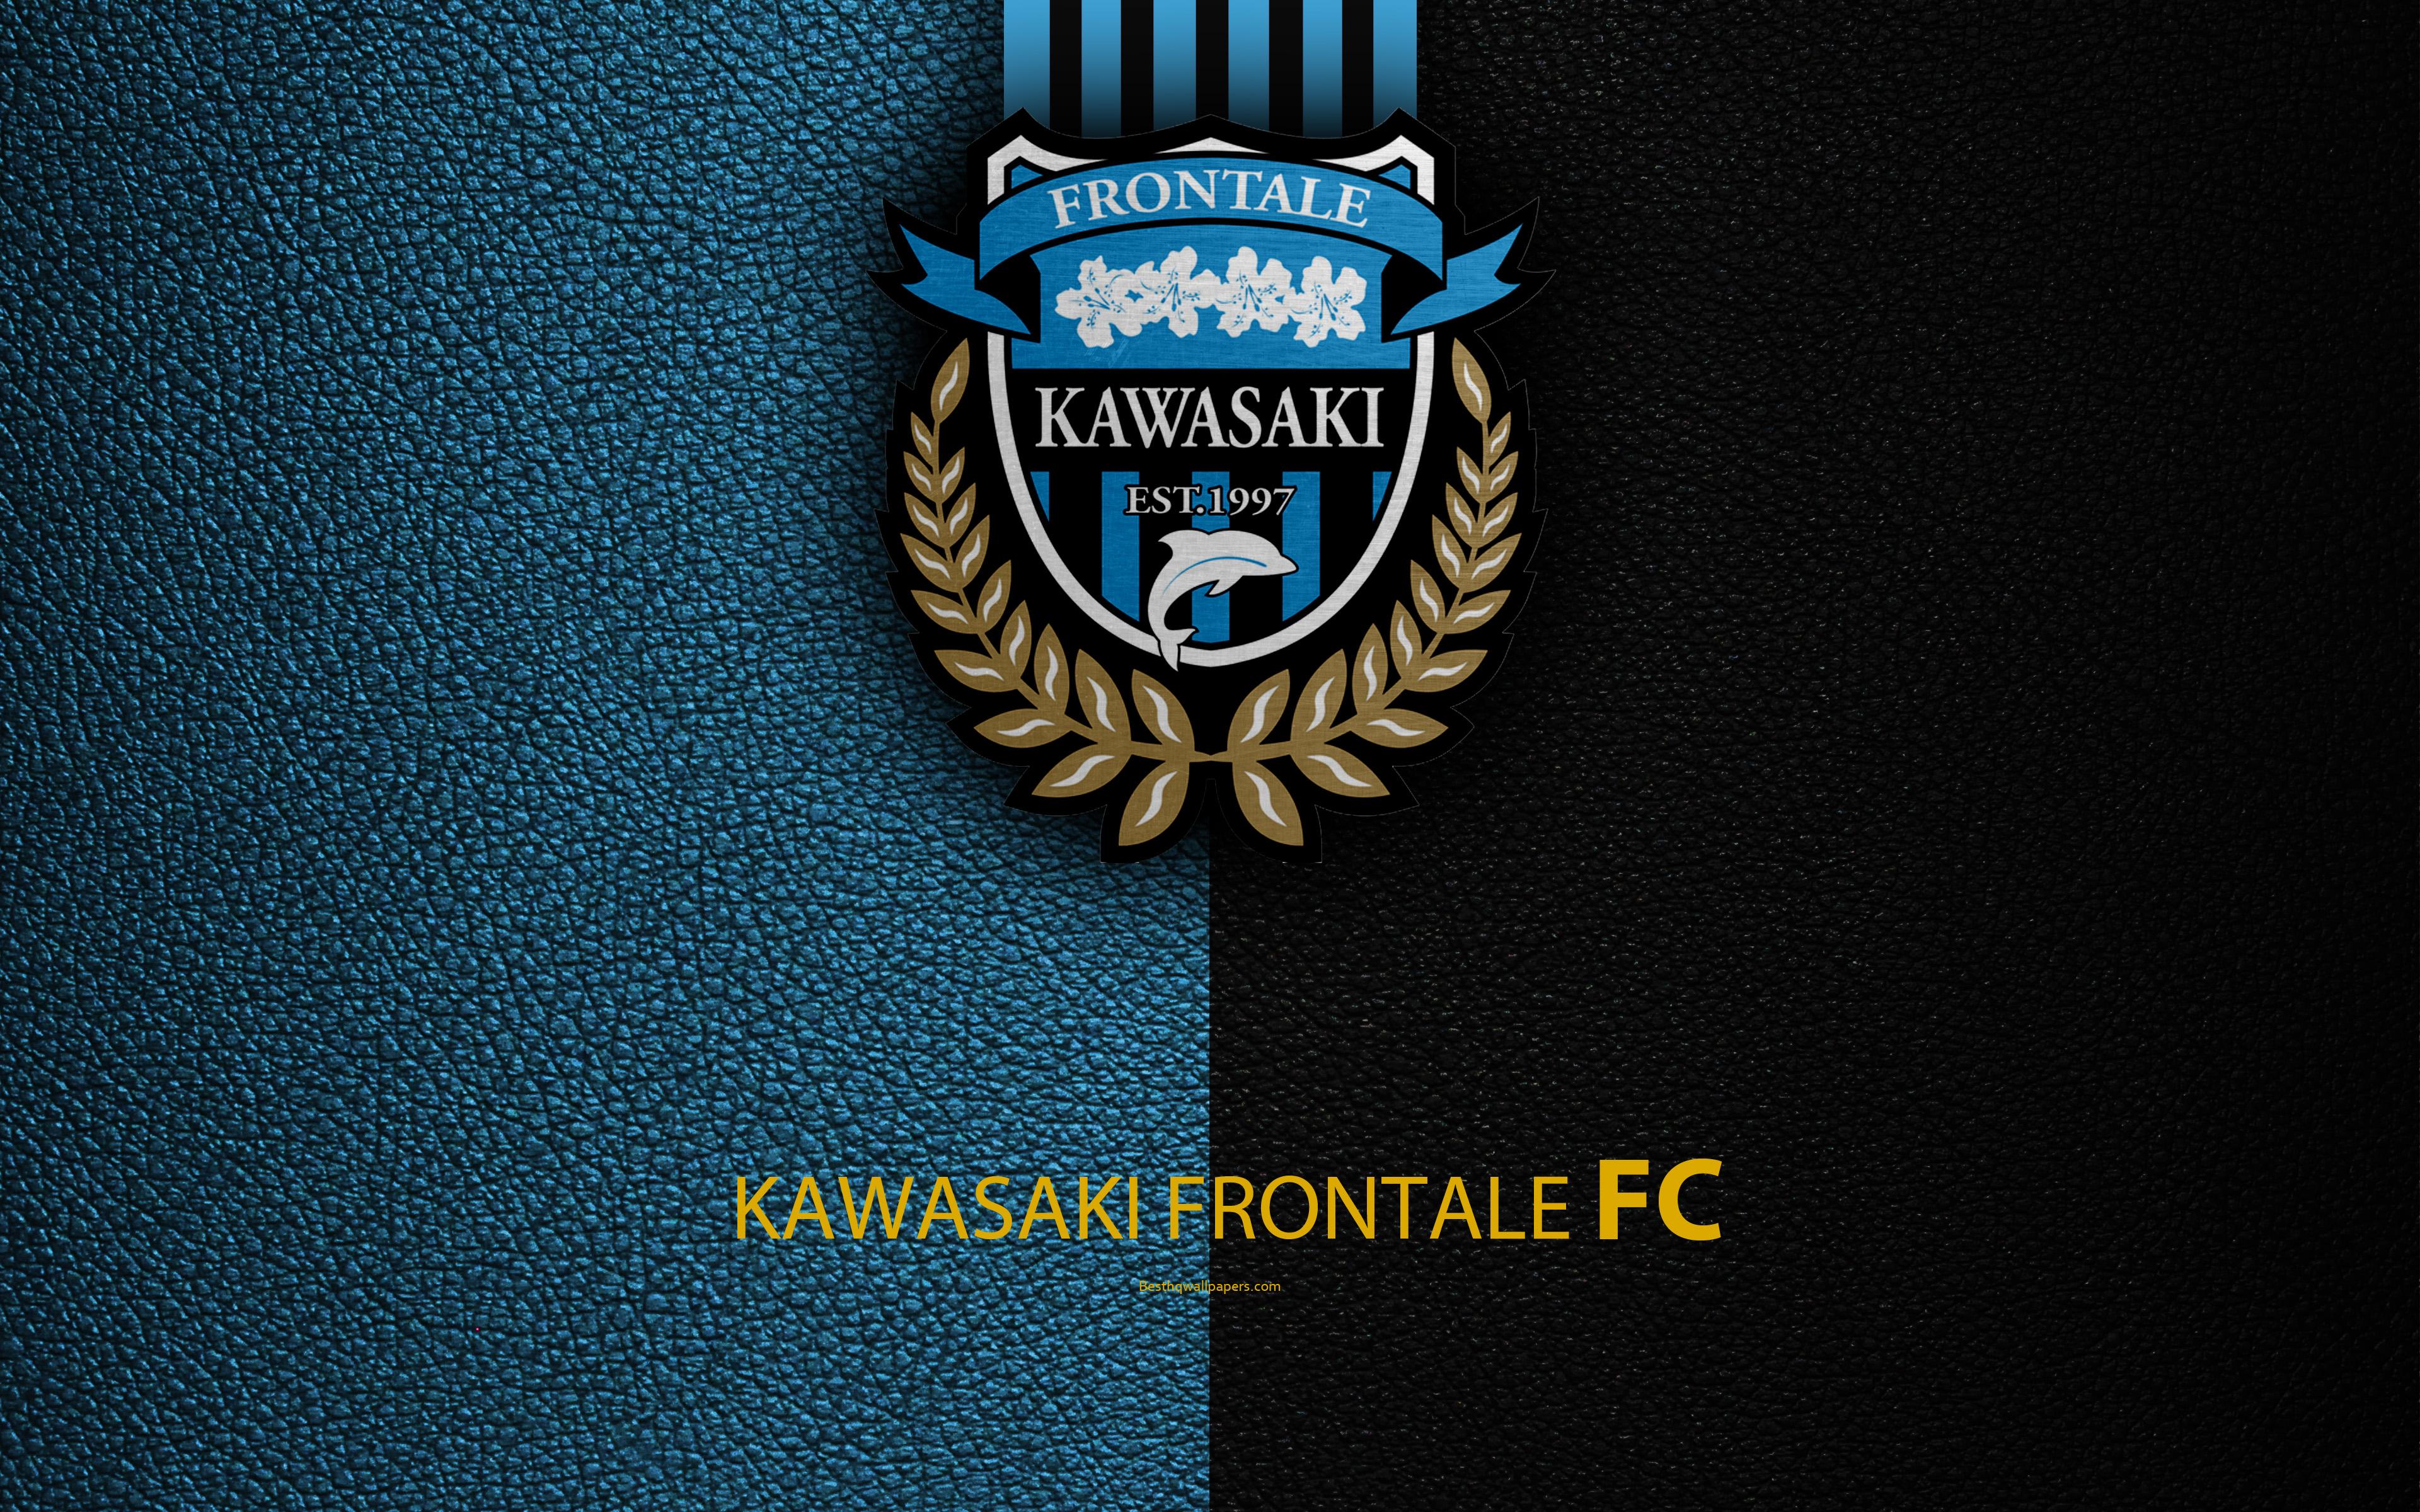 Download wallpaper Kawasaki Frontale FC, 4k, logo, leather texture